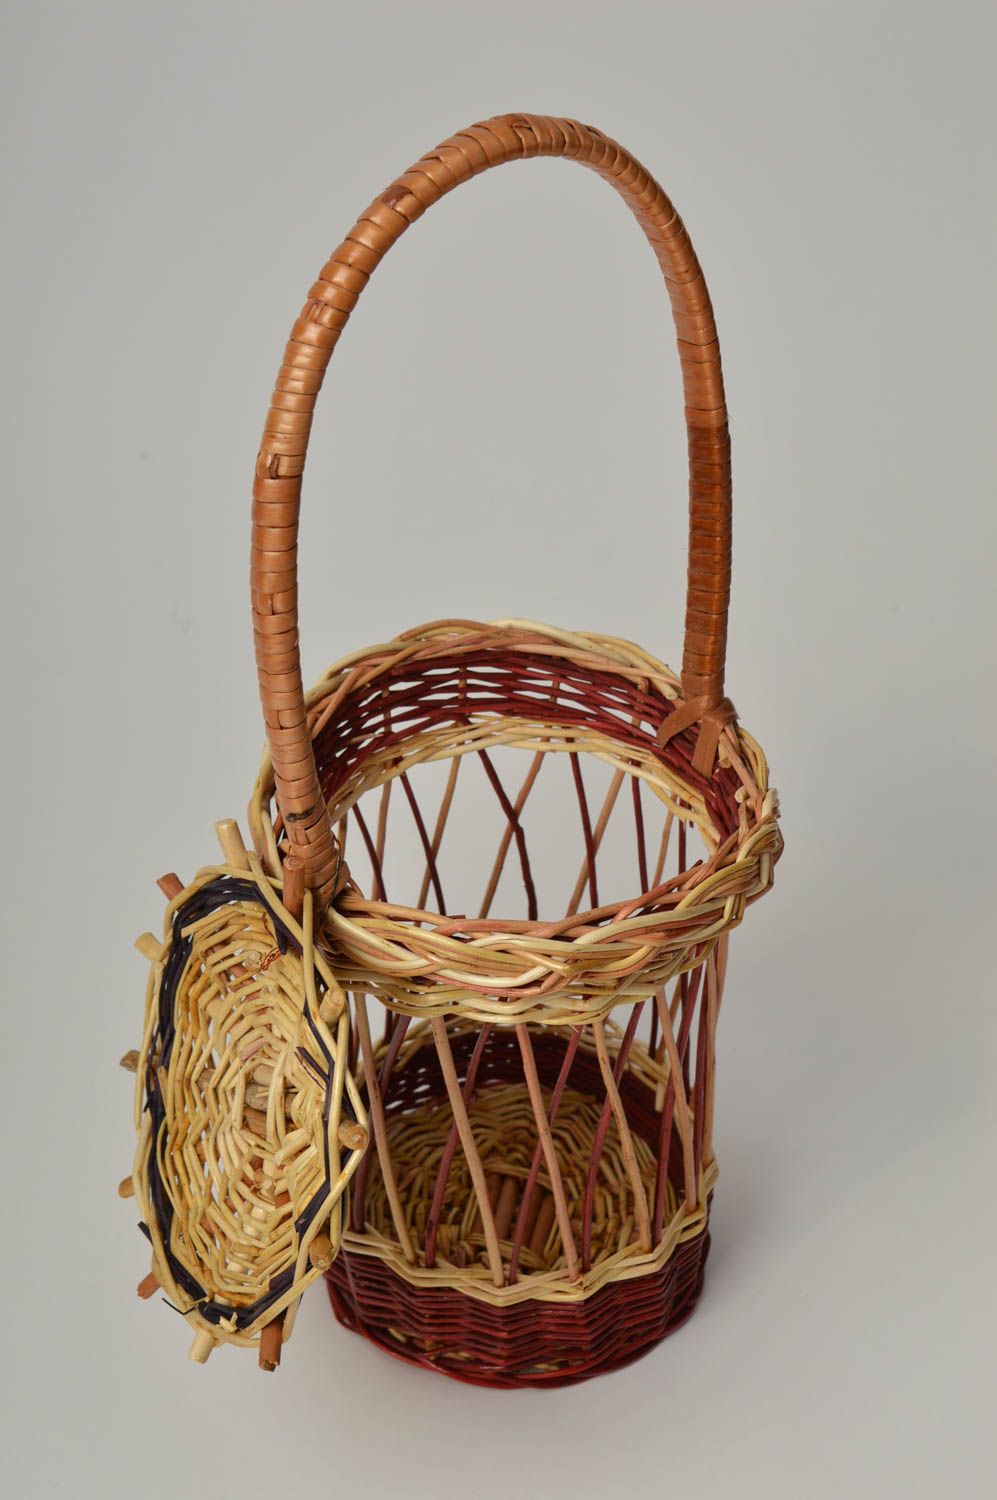 Unusual handmade woven cachepot interior decorating home goods gift ideas photo 2